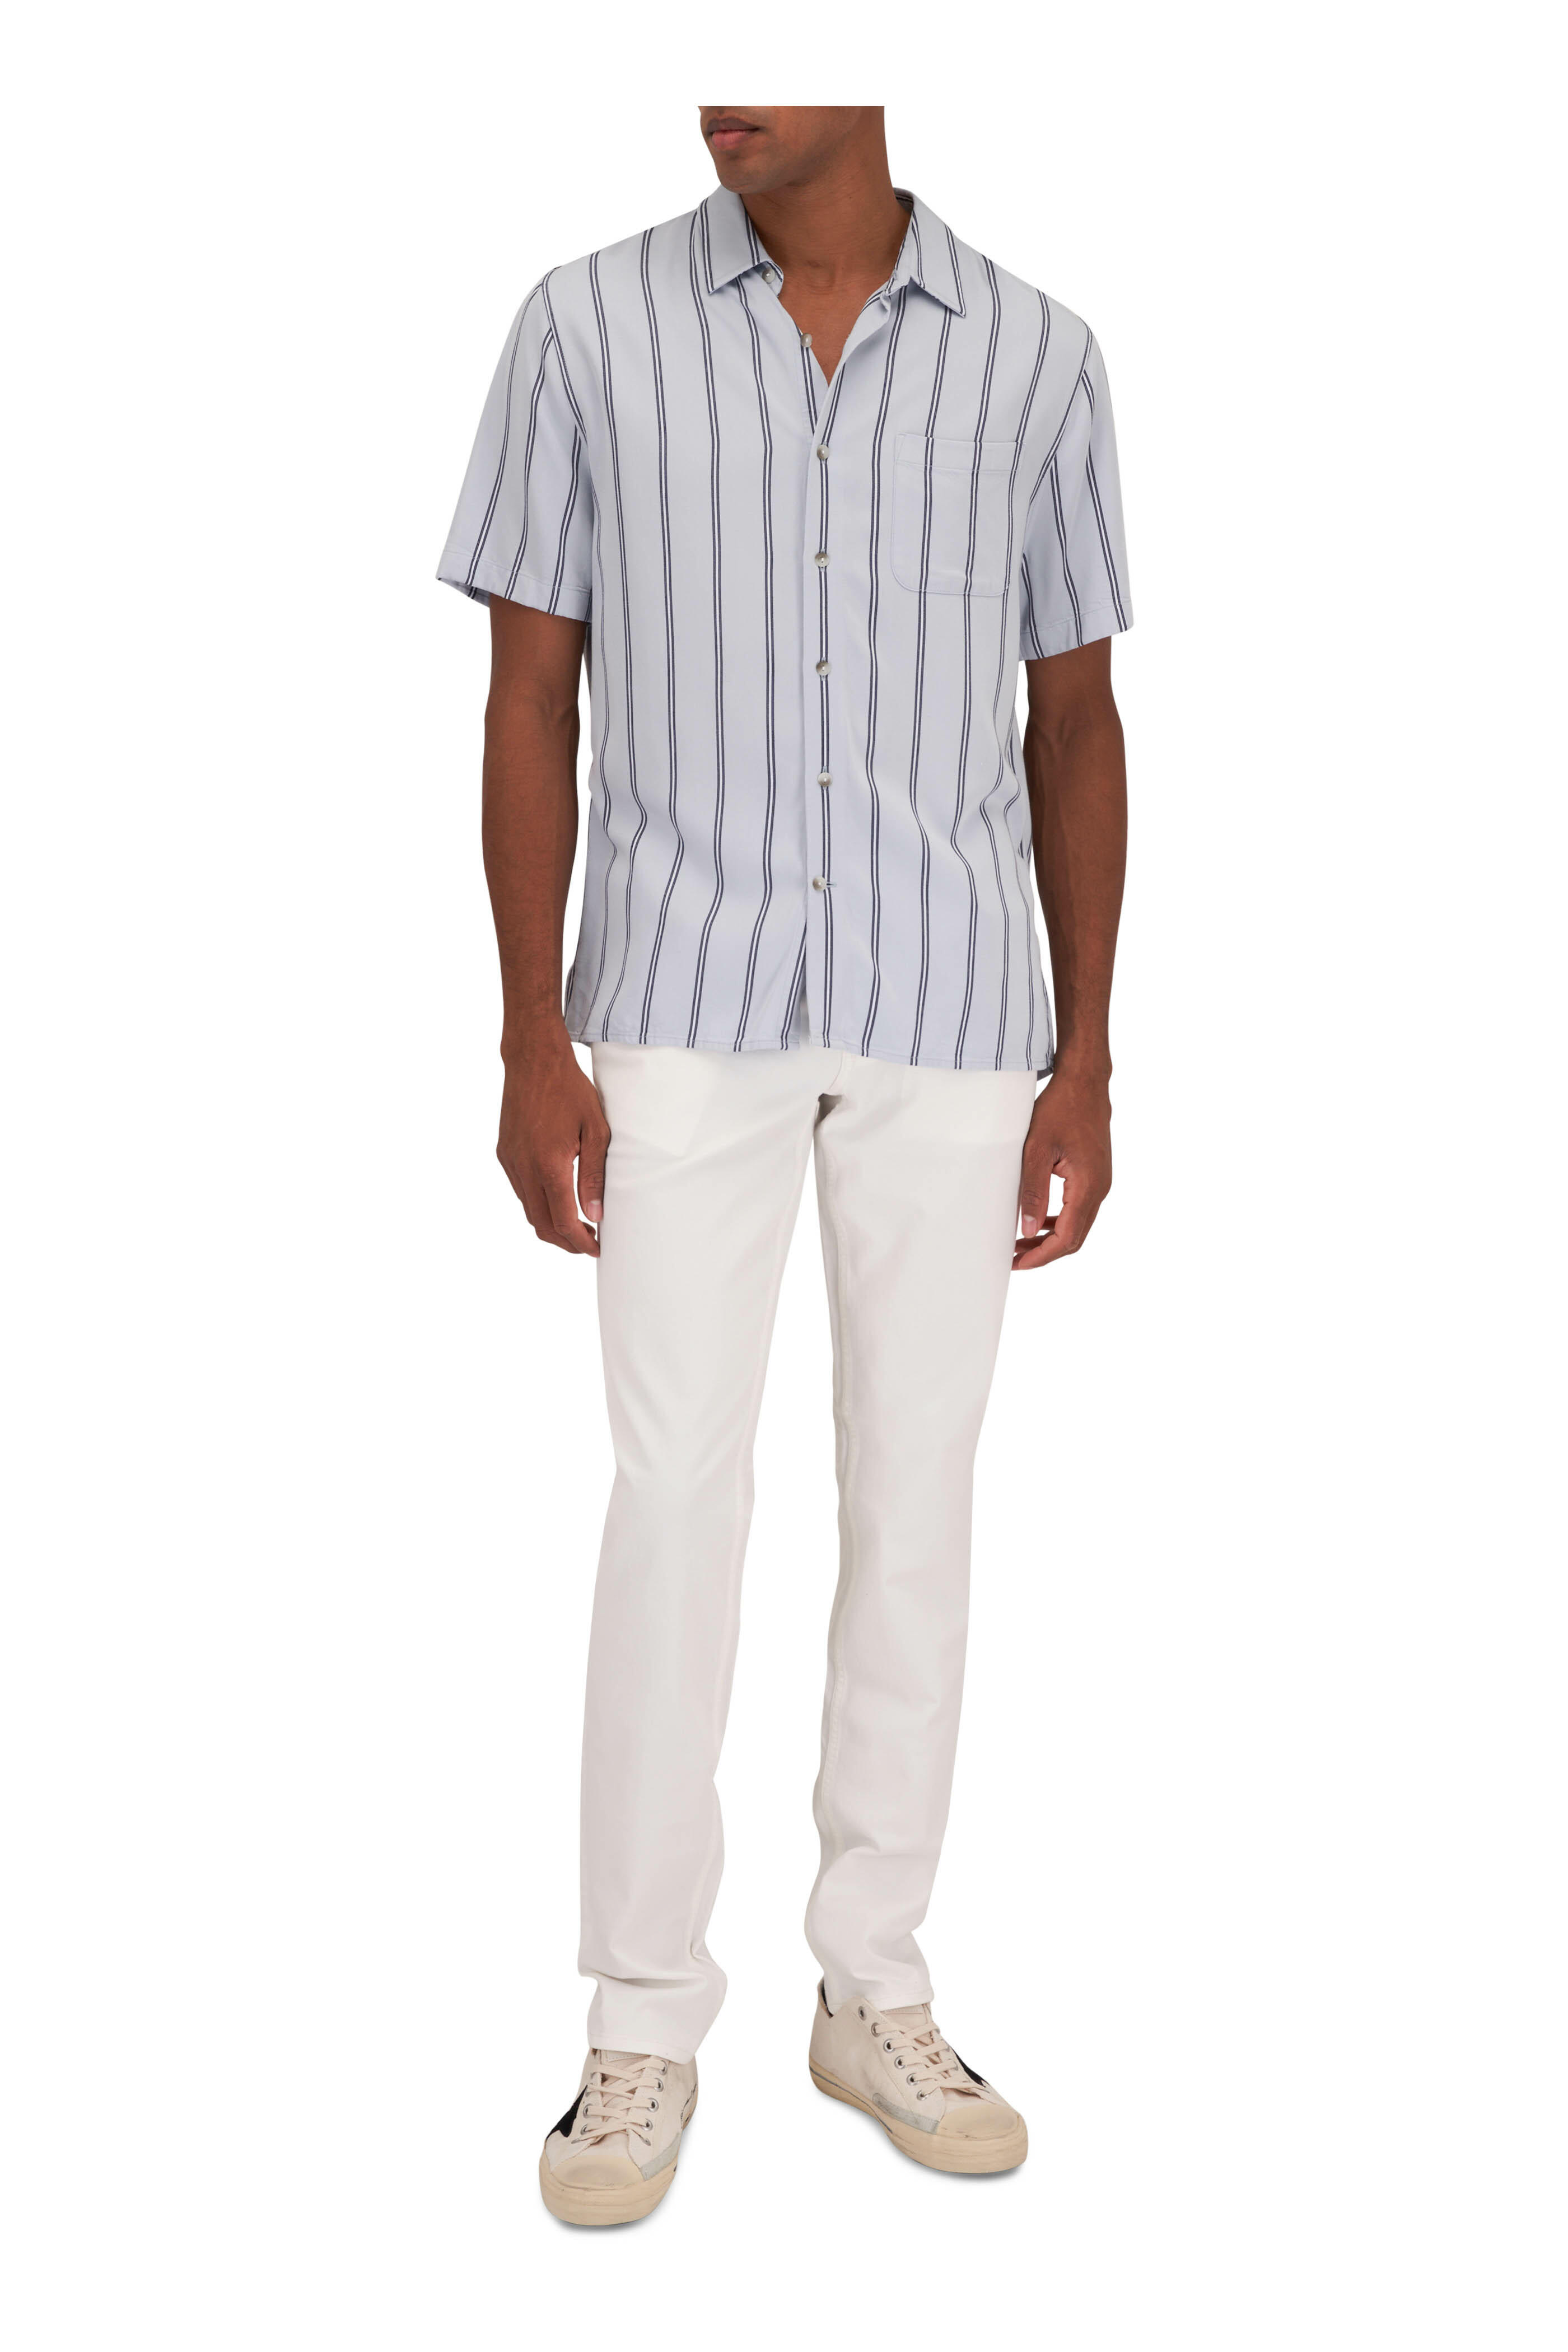 Vince - White Sky Pacifica Stripe Short-Sleeve Shirt